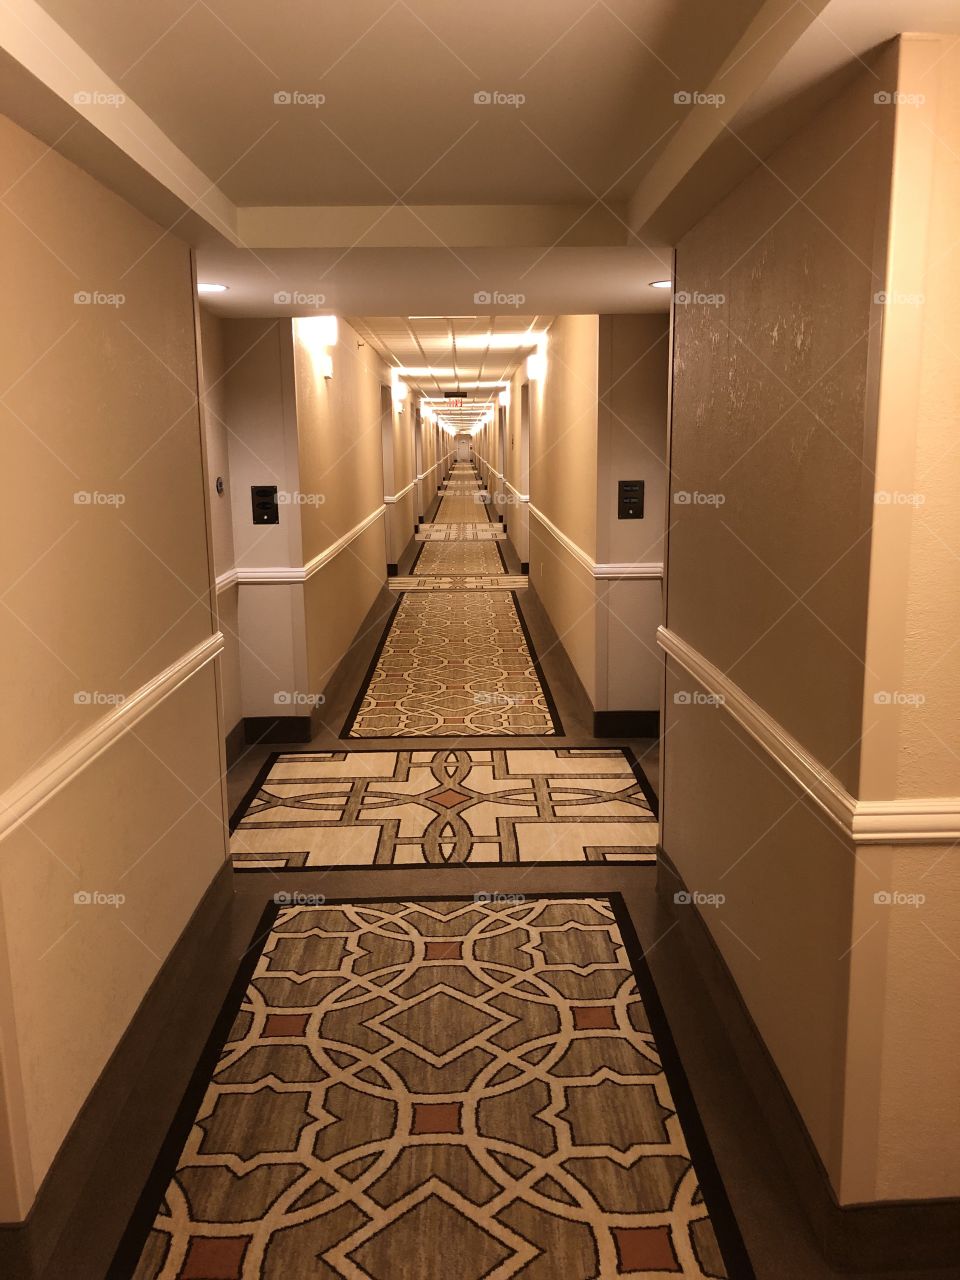 Hallway at Hollywood Casino Hotel